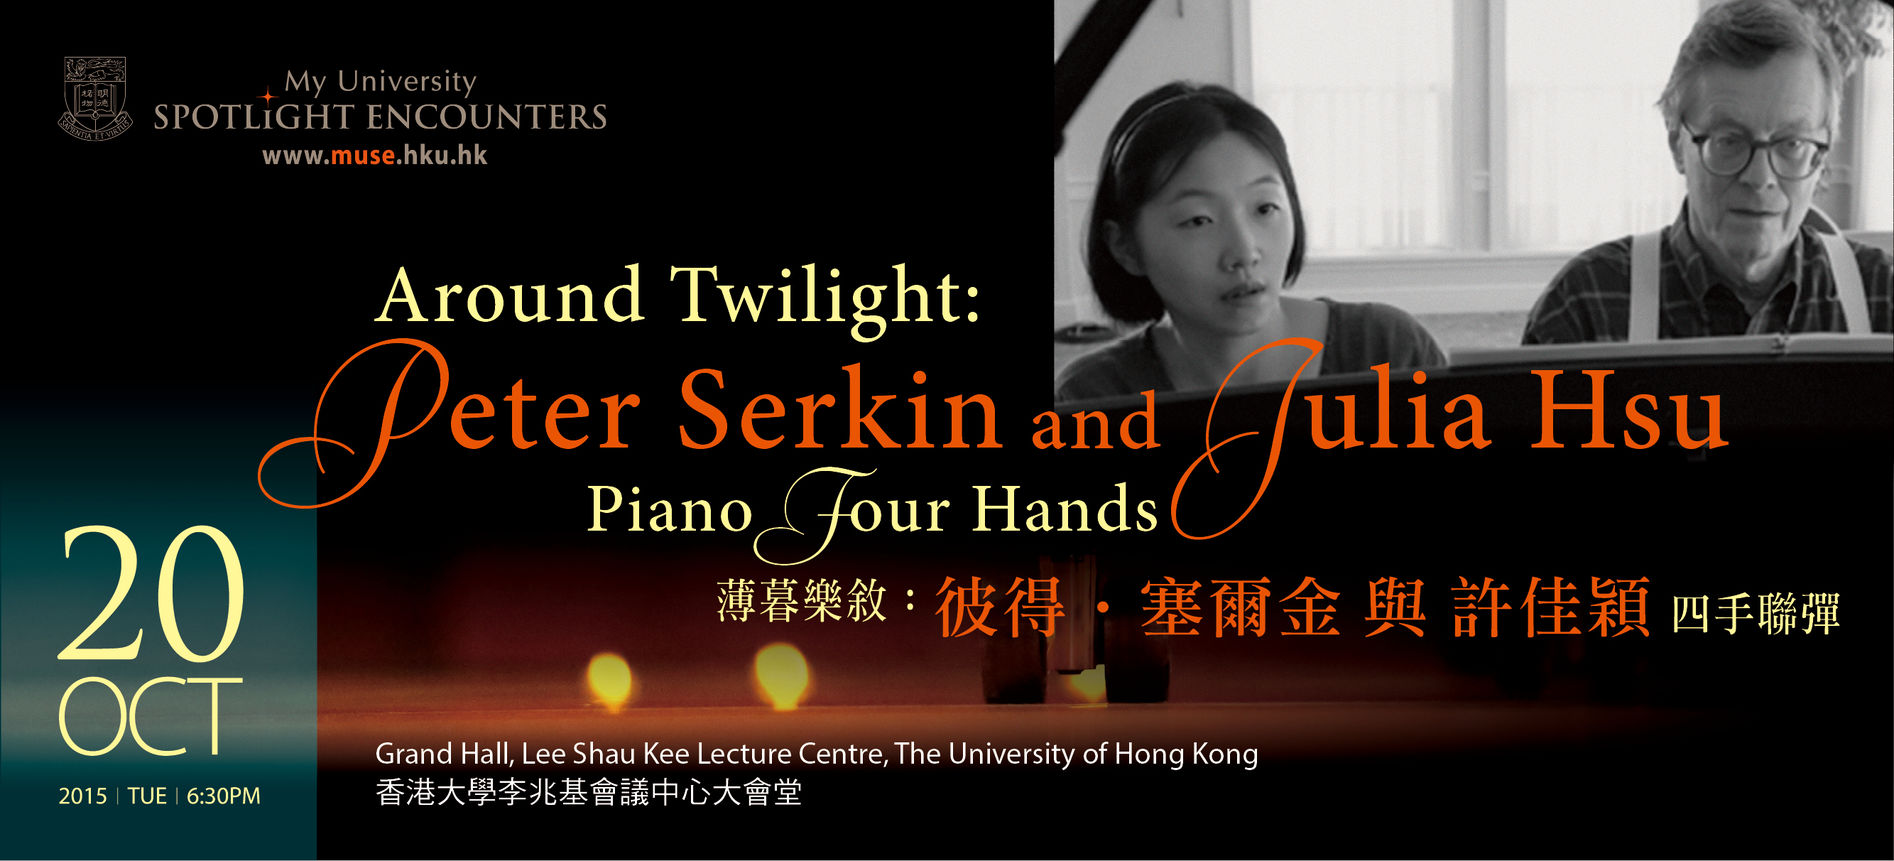 Around Twilight: Peter Serkin and Julia Hsu Piano Four Hands